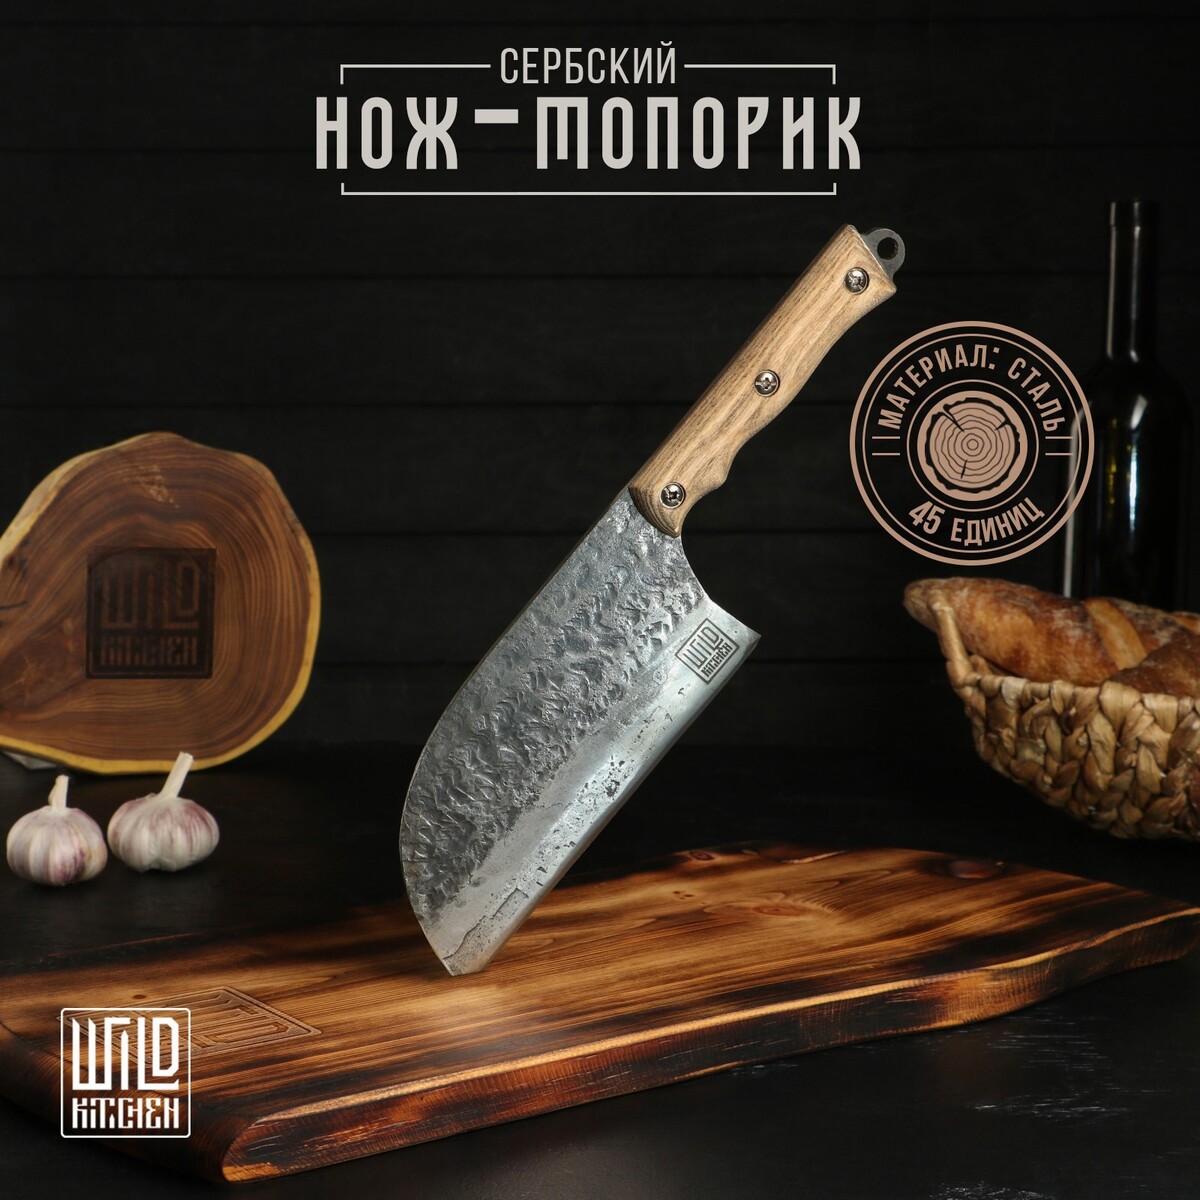 Нож-топорик сербский wild kitchen, лезвие 17 см, сталь 45 Wild Kitchen